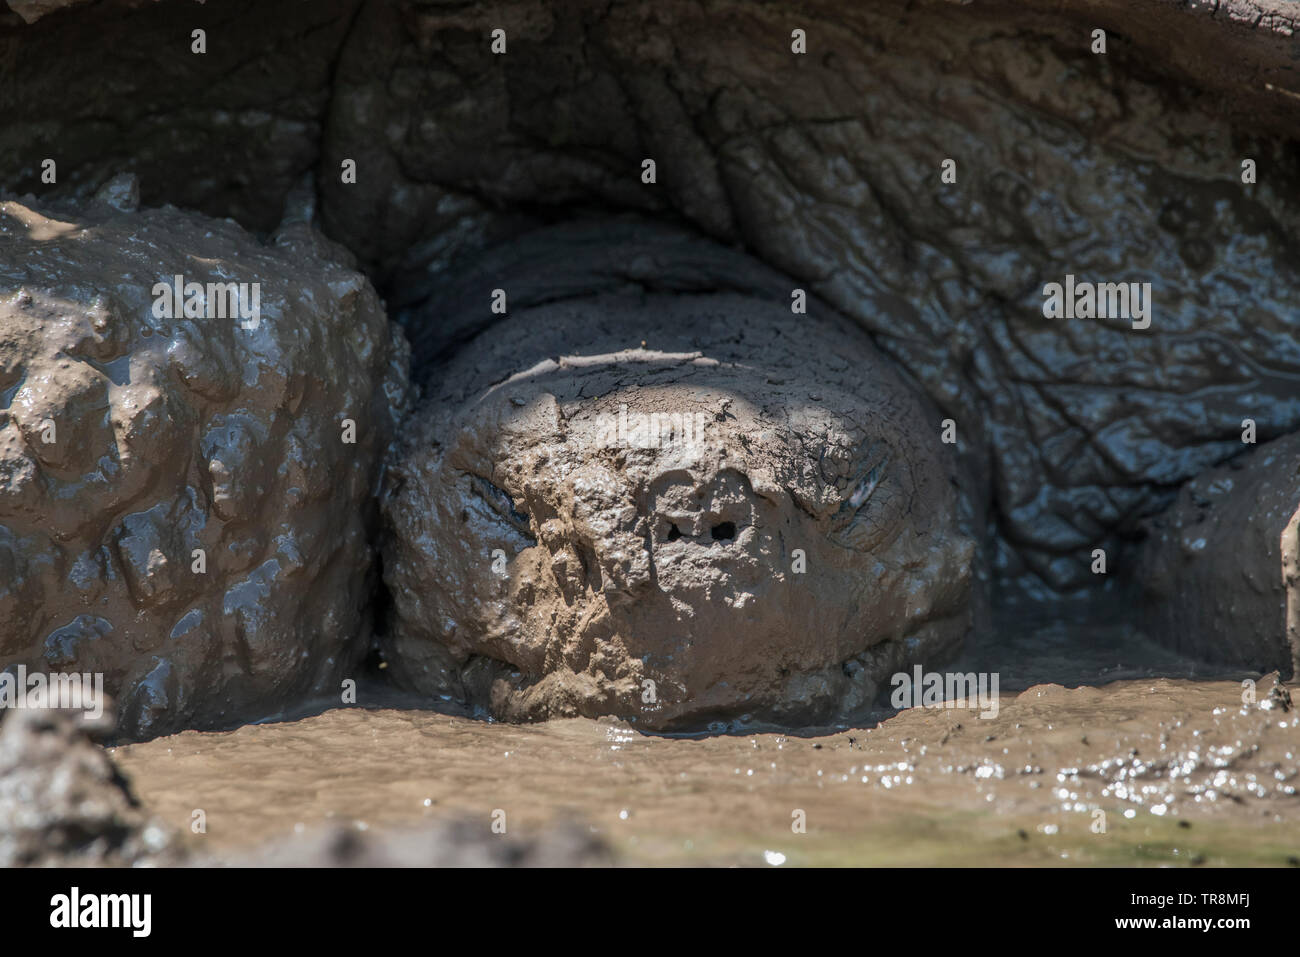 A galapagos giant tortoise (Chelonoidis nigra) wallowing in the mud on Santa Cruz Island, Ecuador. Stock Photo